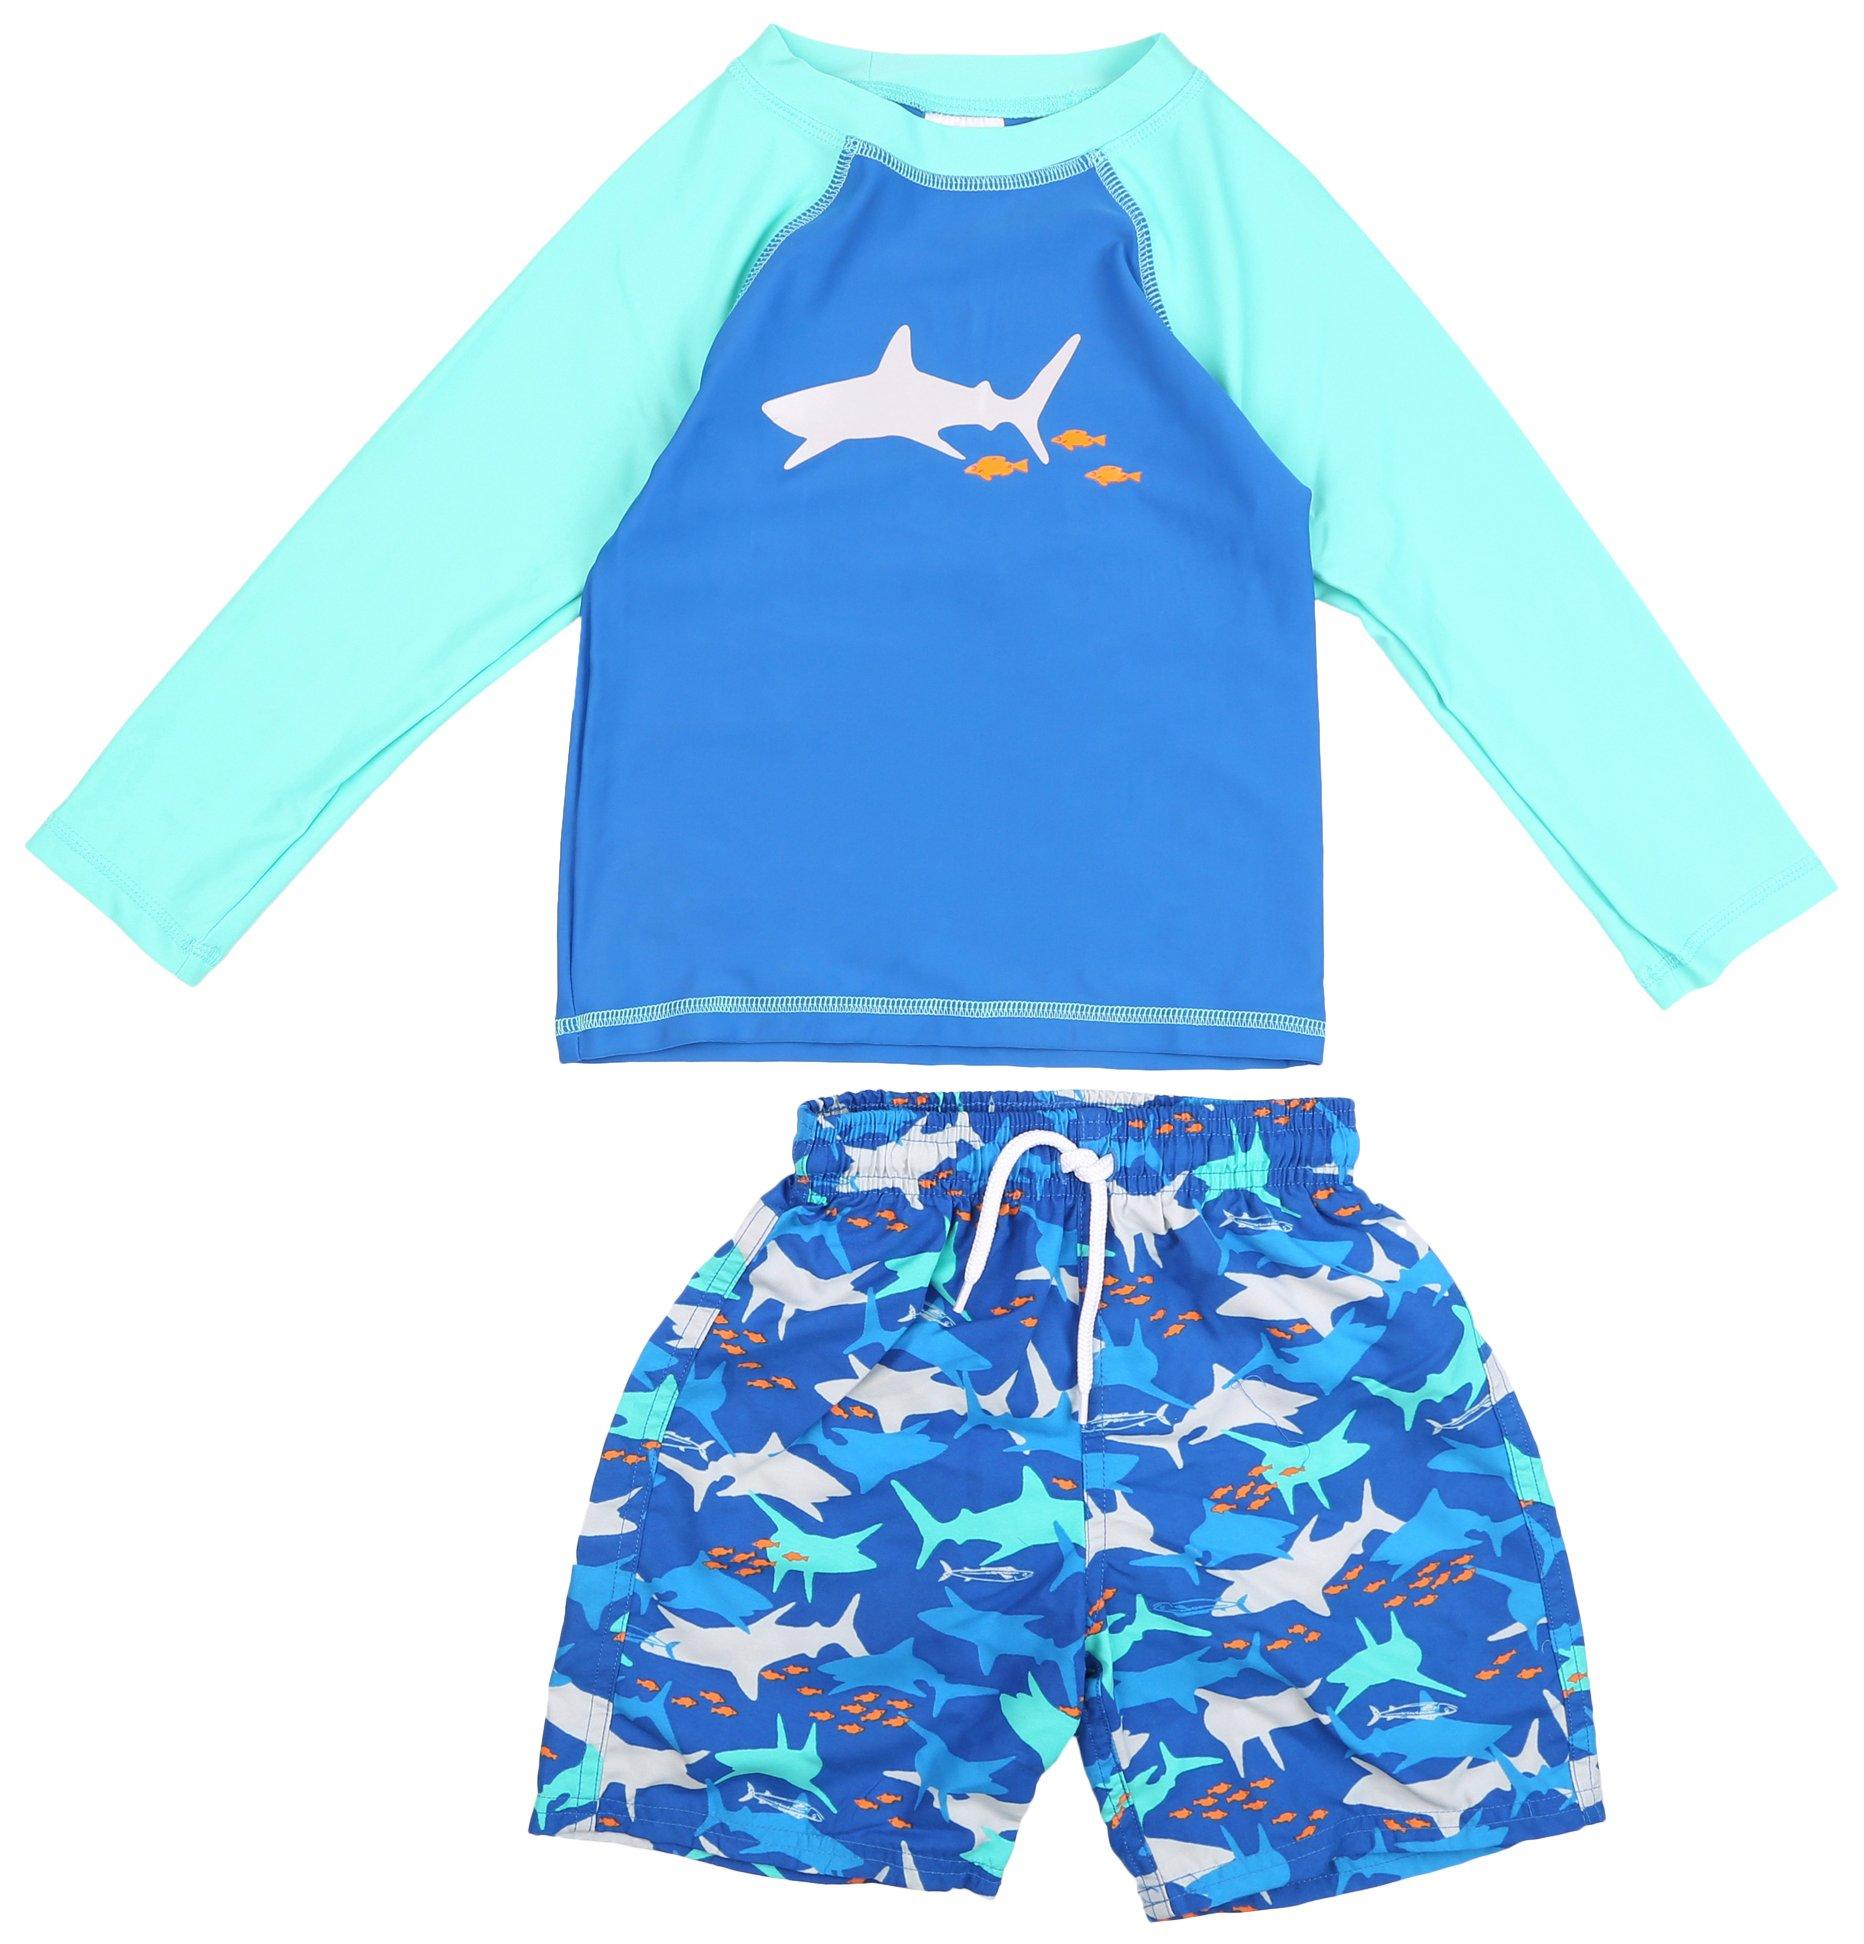 Little Boys 2-pc. Sharks Swimsuit Set